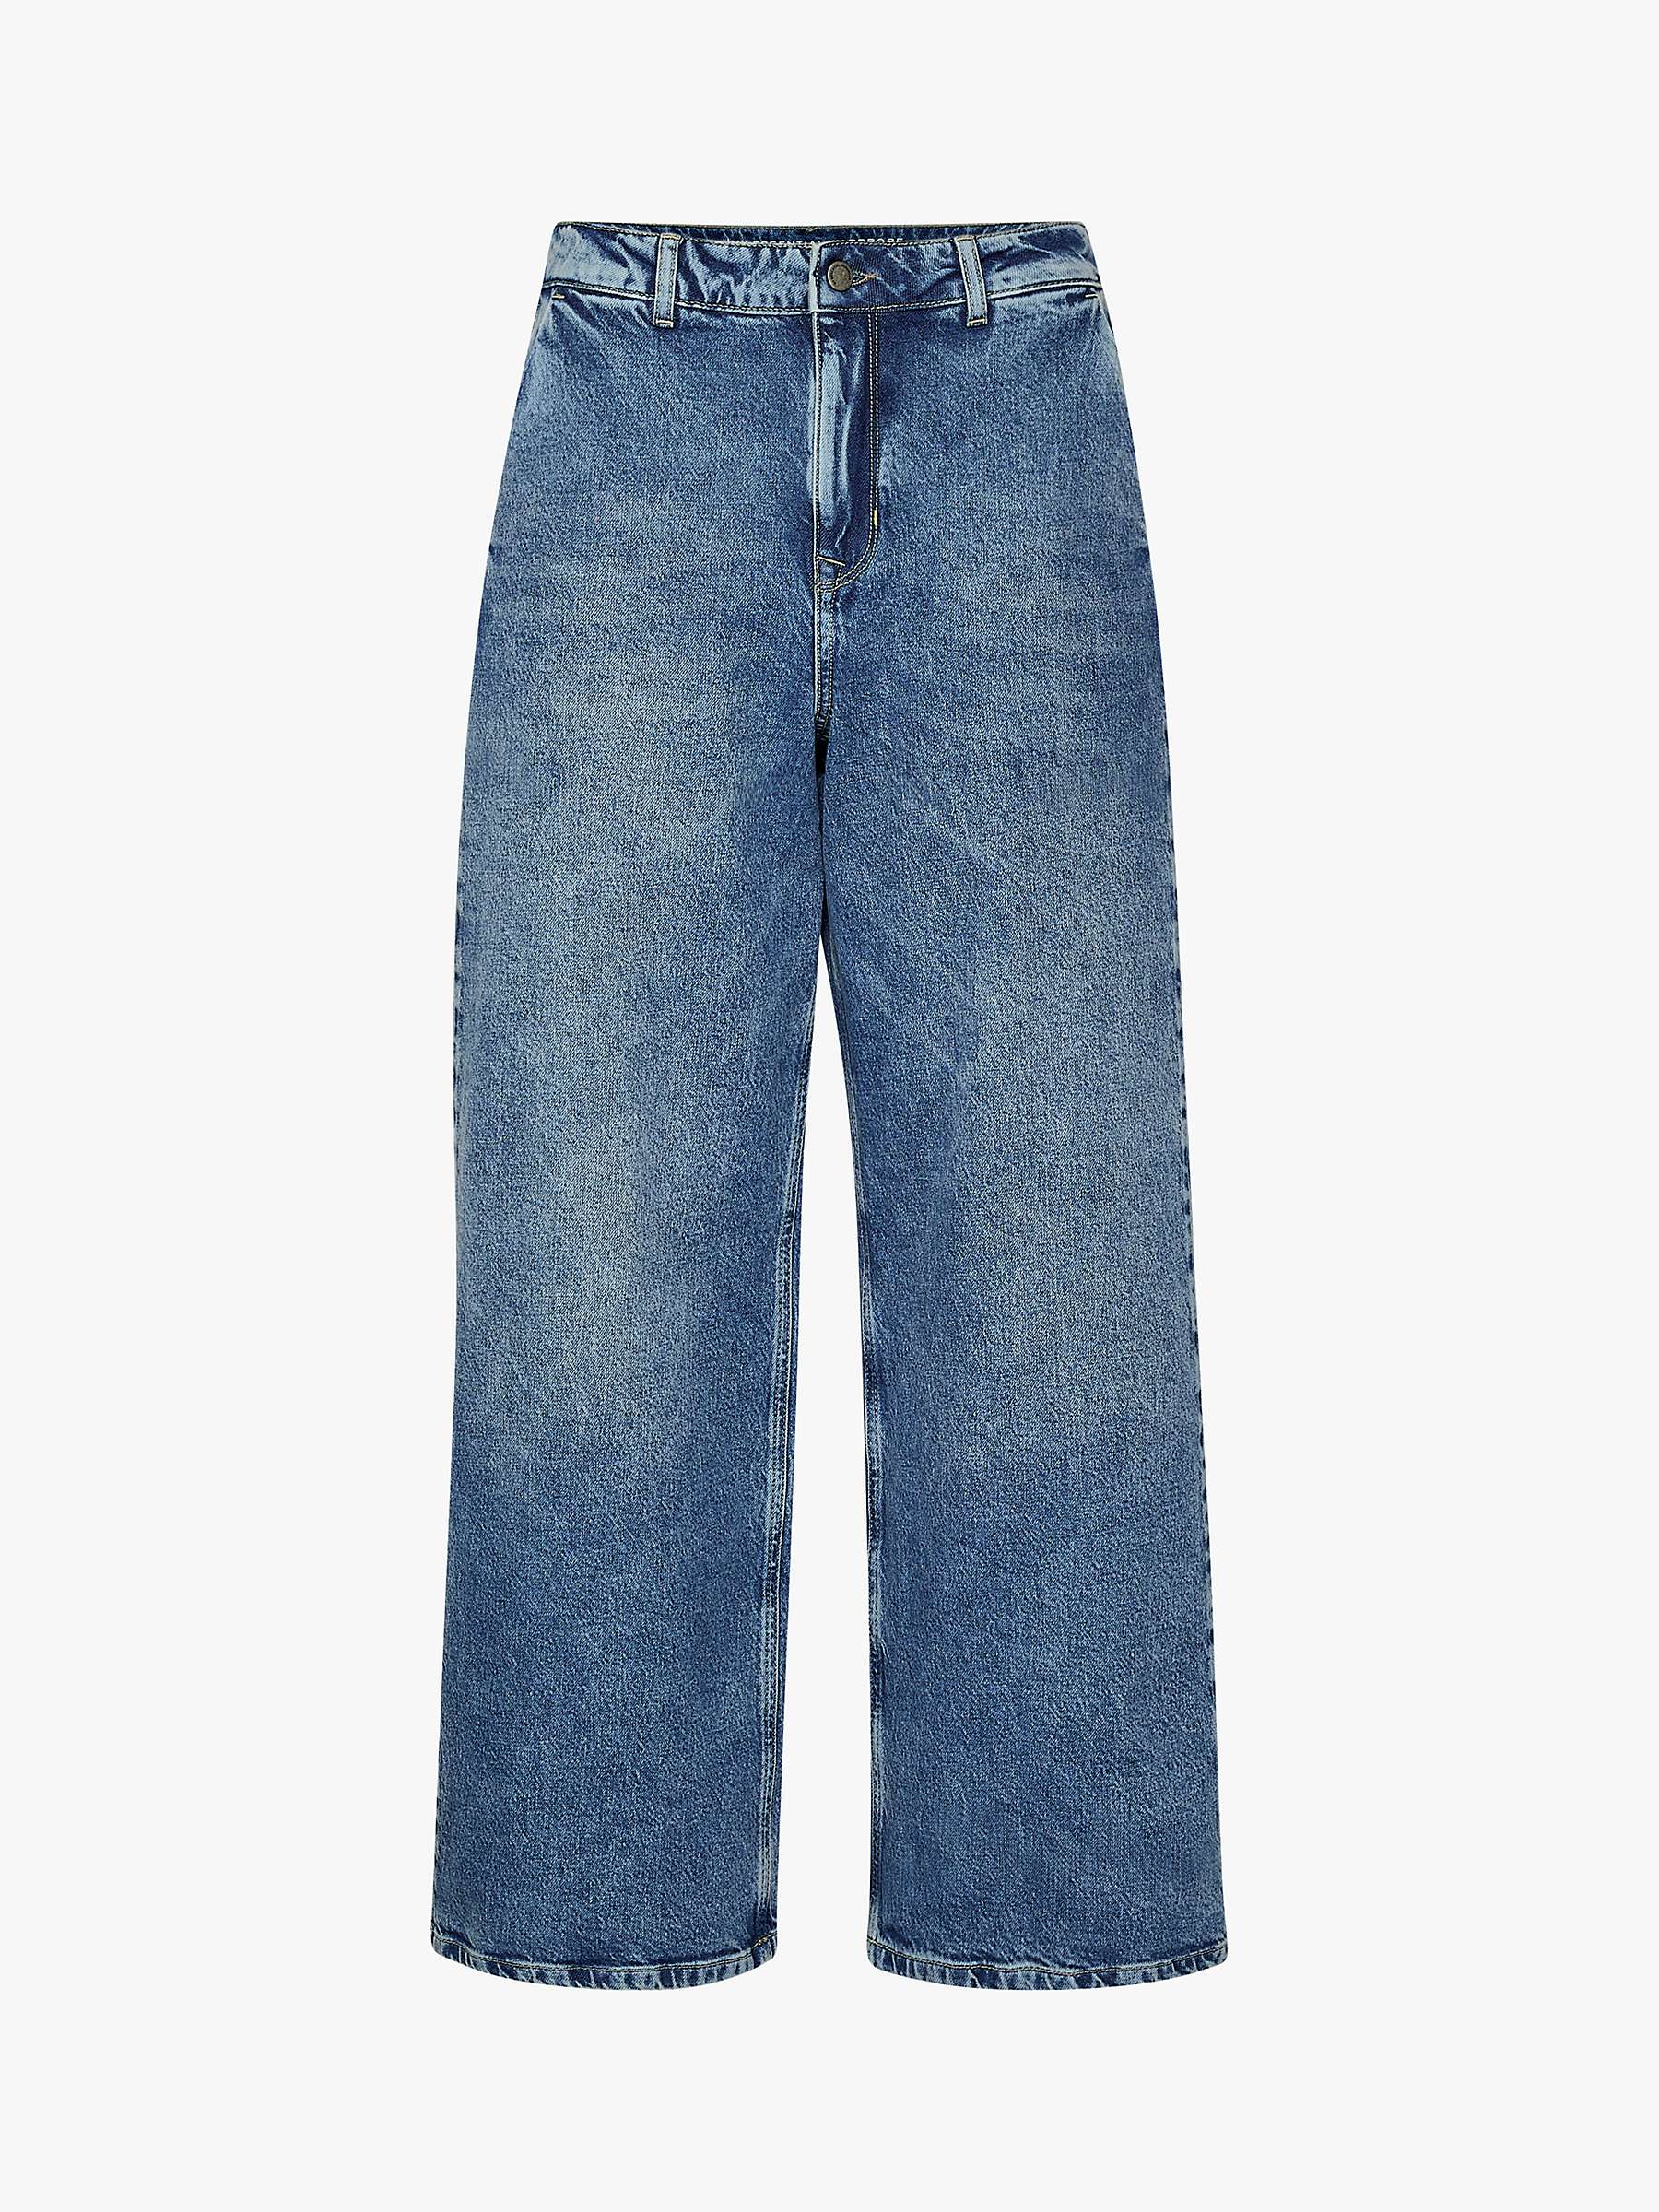 Buy MY ESSENTIAL WARDROBE Tusa Baggy Fit Regular Waist Jeans, Medium Blue Wash Online at johnlewis.com